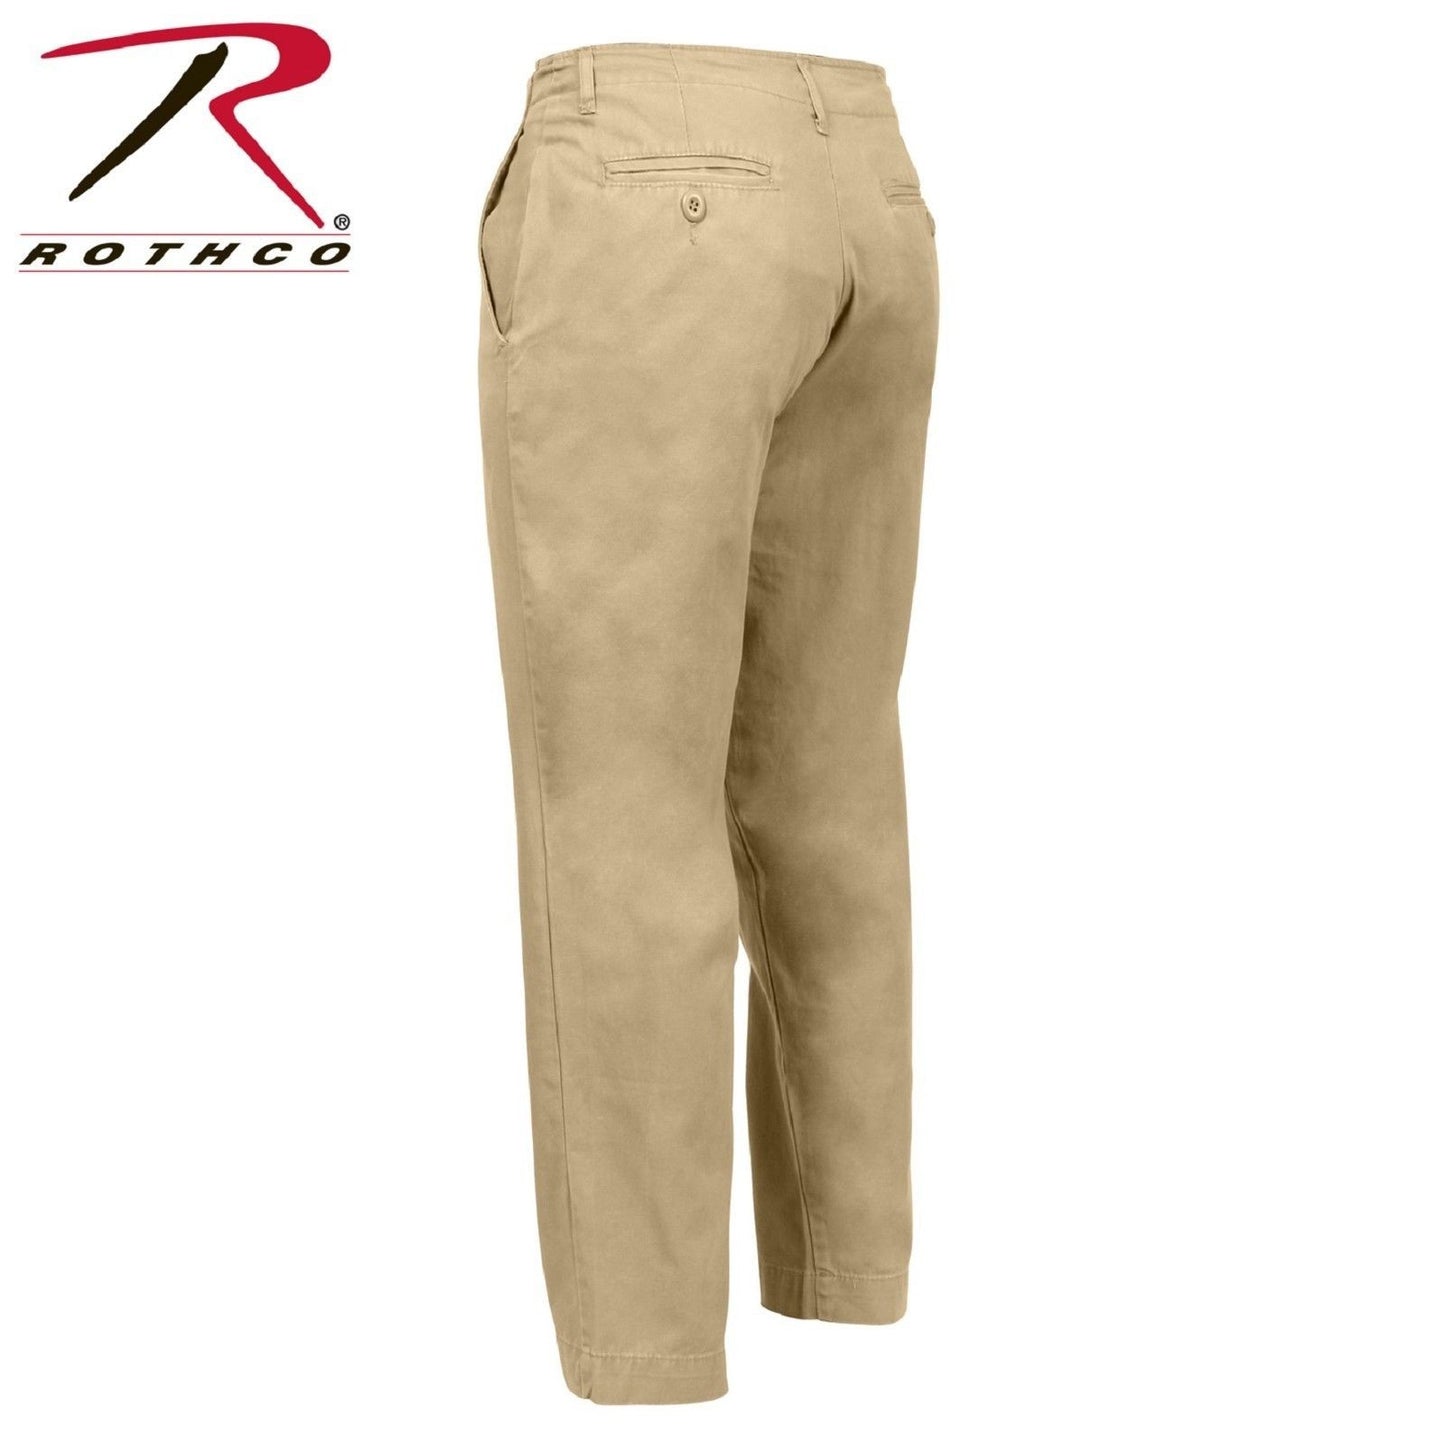 Mens Washed Cotton Khaki Chino Pants - Rothco GI-Style Vintage Chinos 2346